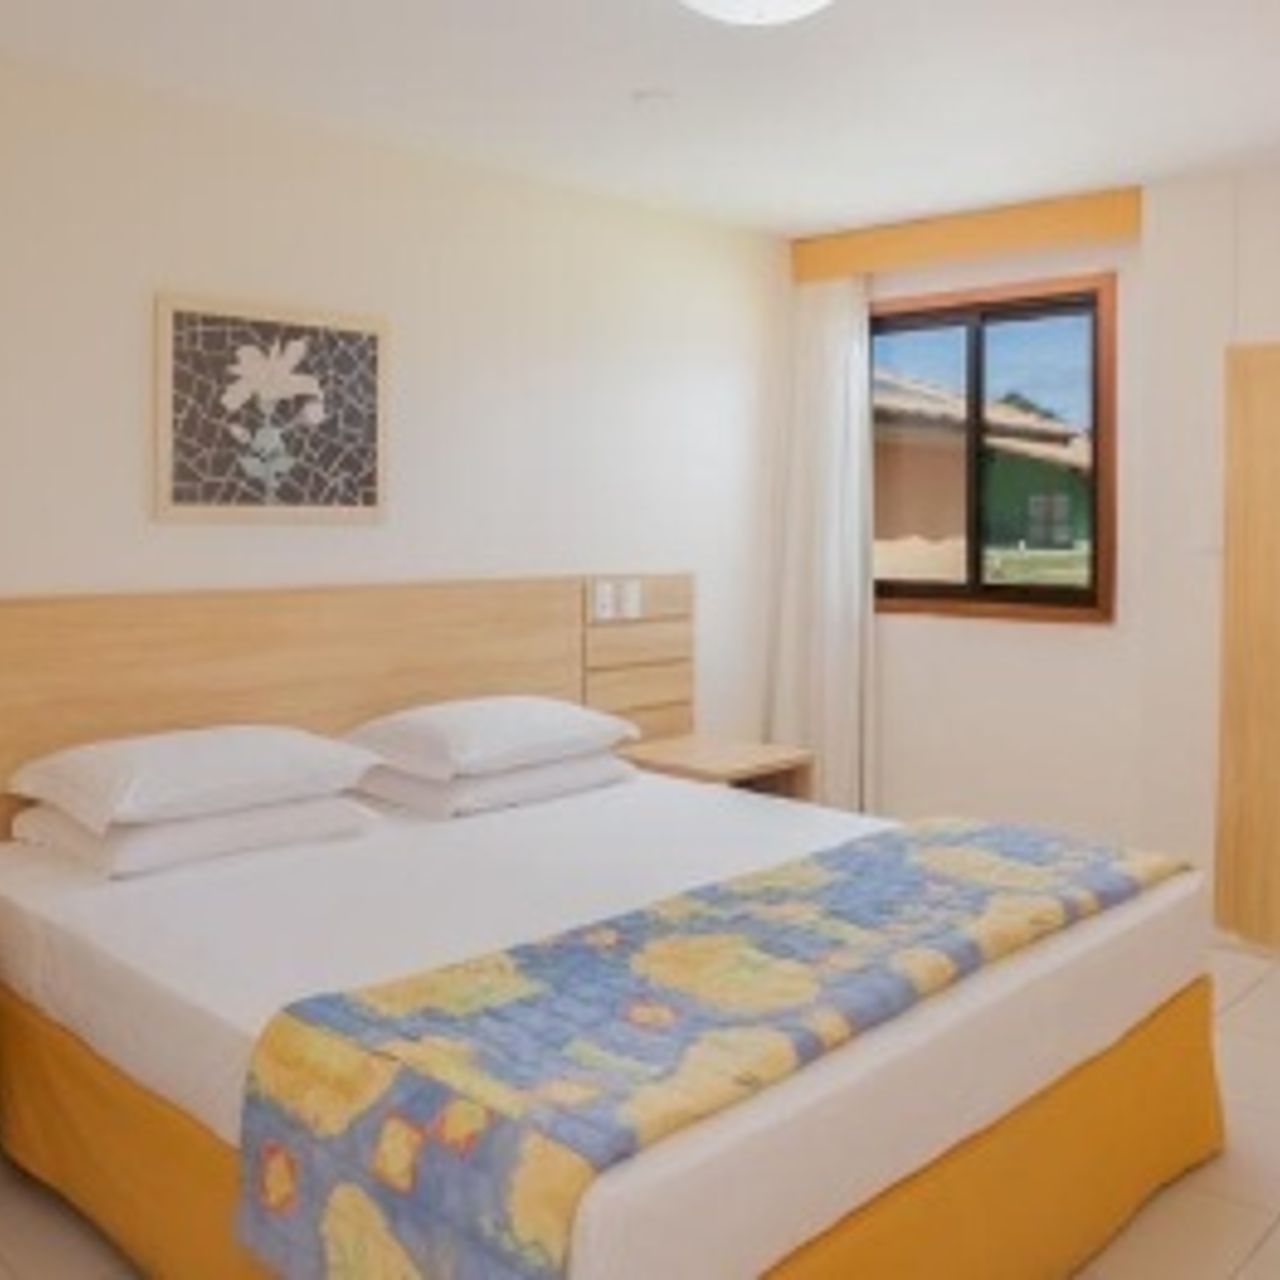 Hotel Prodigy Beach Resort and Conventions Aracaju - HOTEL INFO